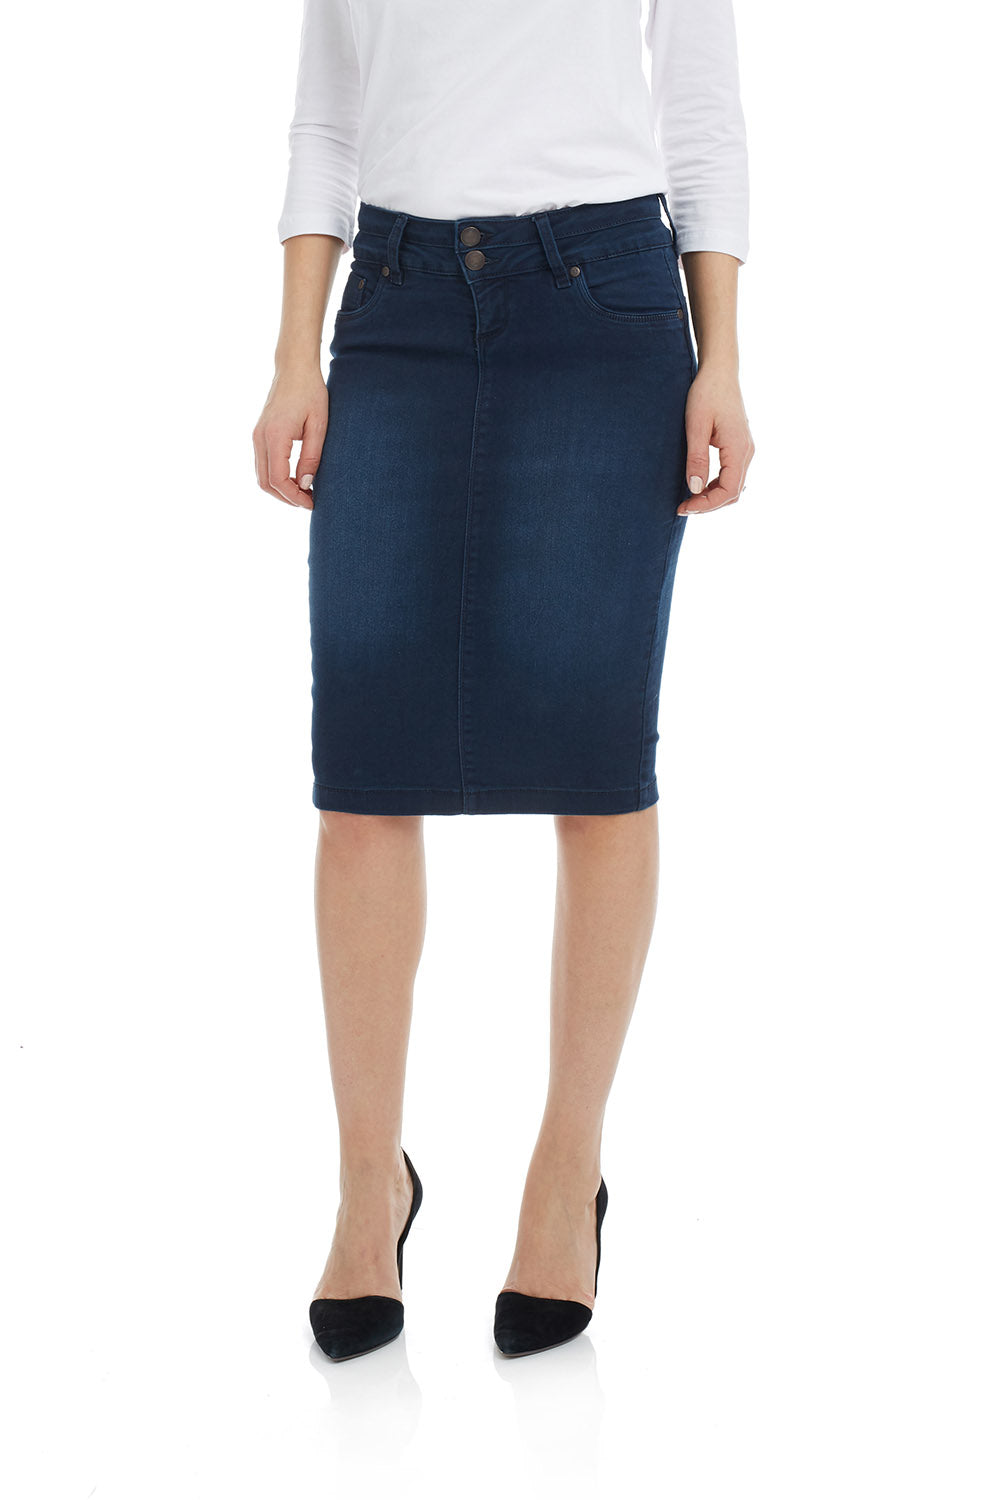 Esteez BEVERLY HILLS Denim Skirt - Below the Knee Jean Skirt with Tummy Control for Women